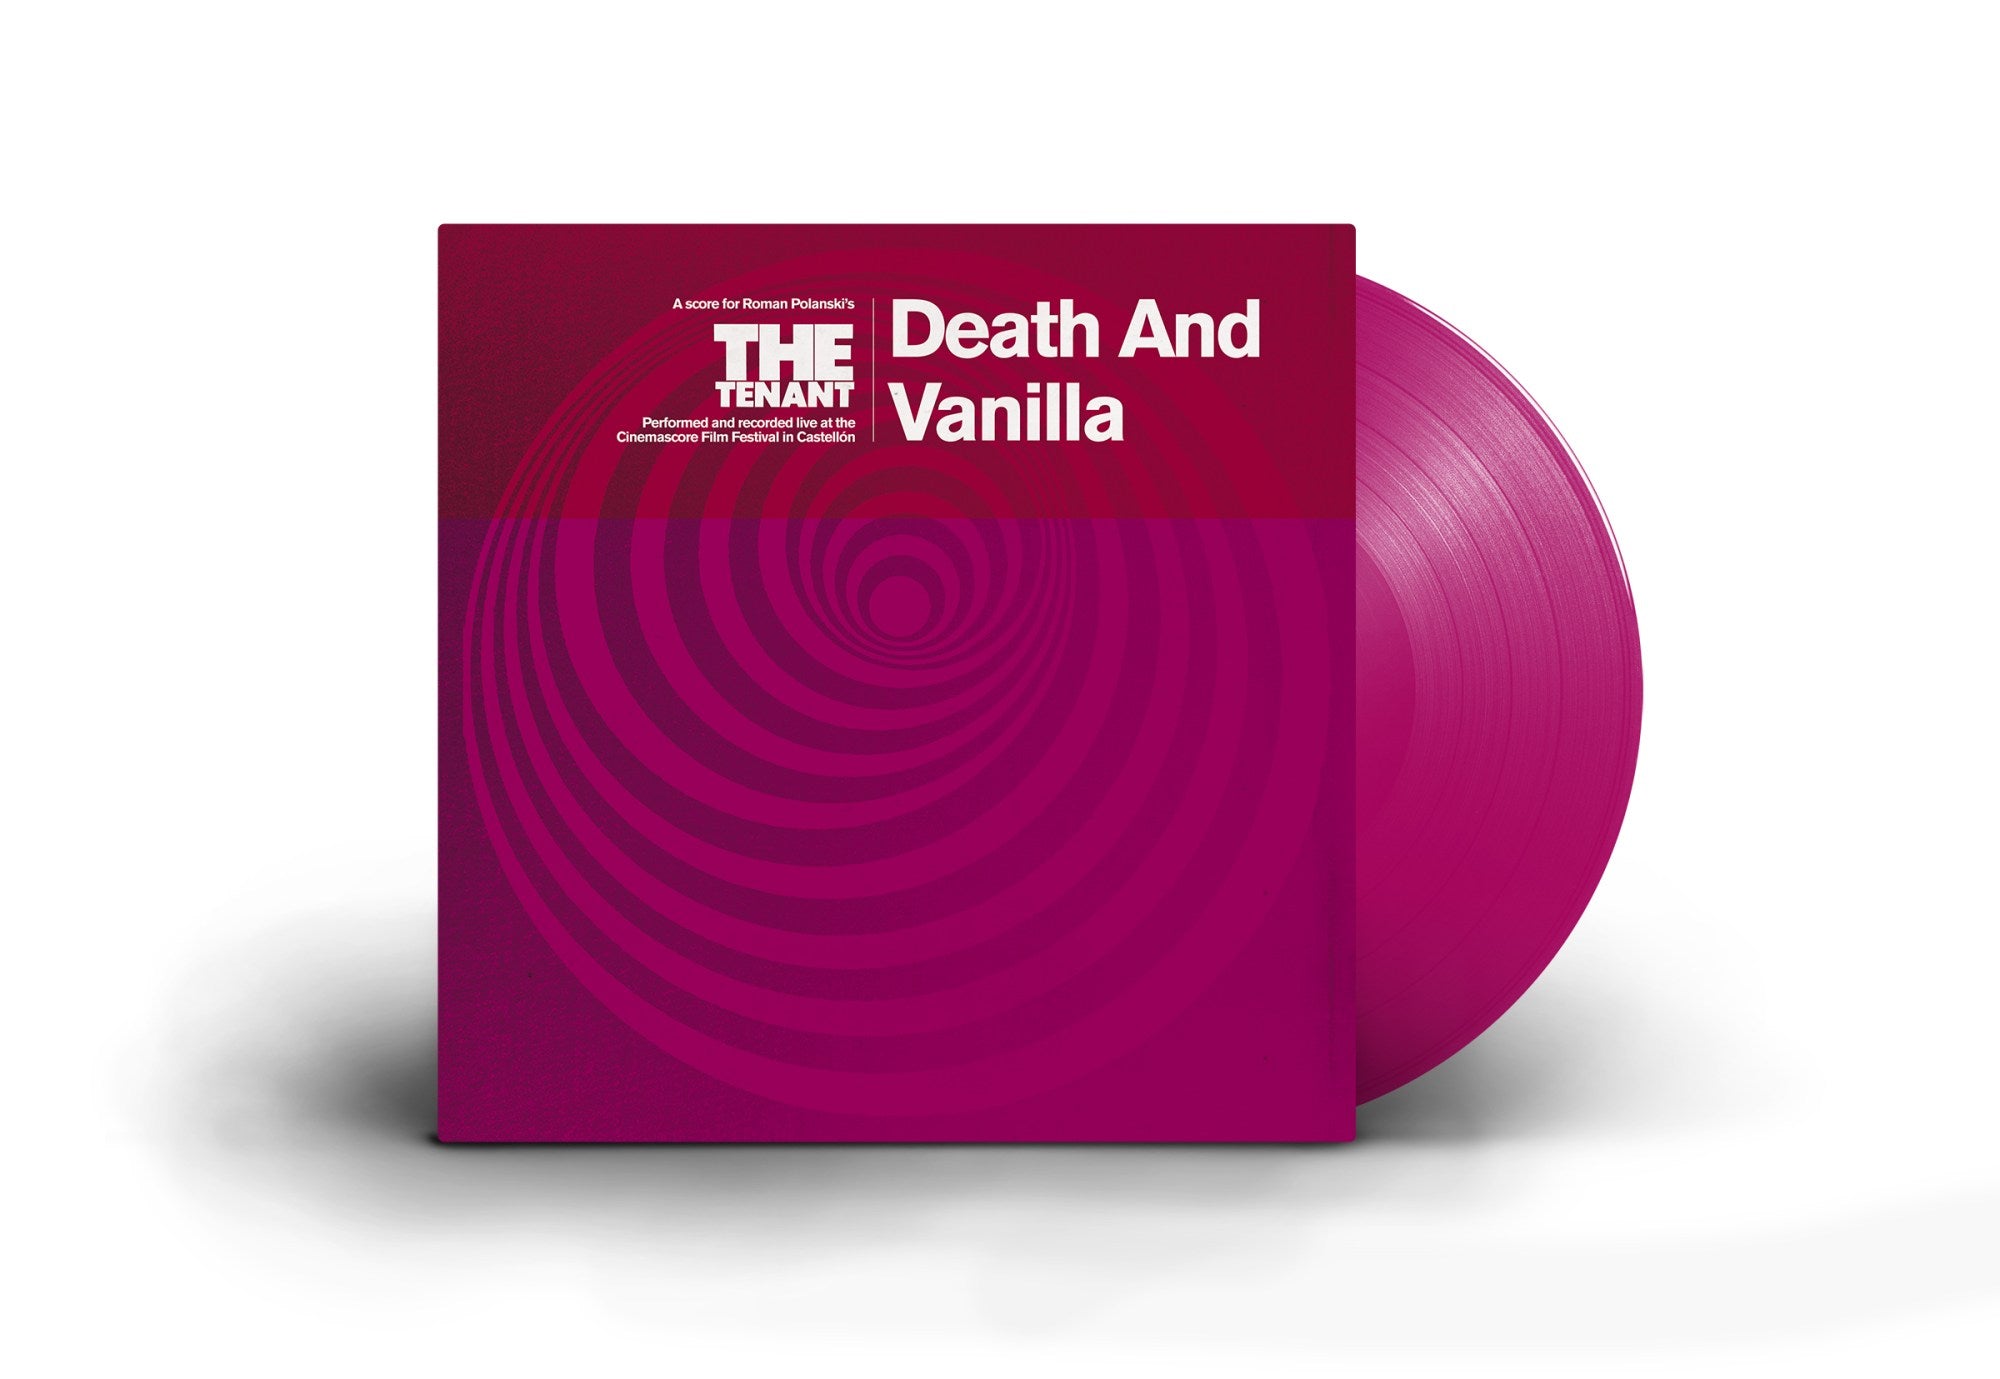 Death and Vanilla - 'The Tenant'